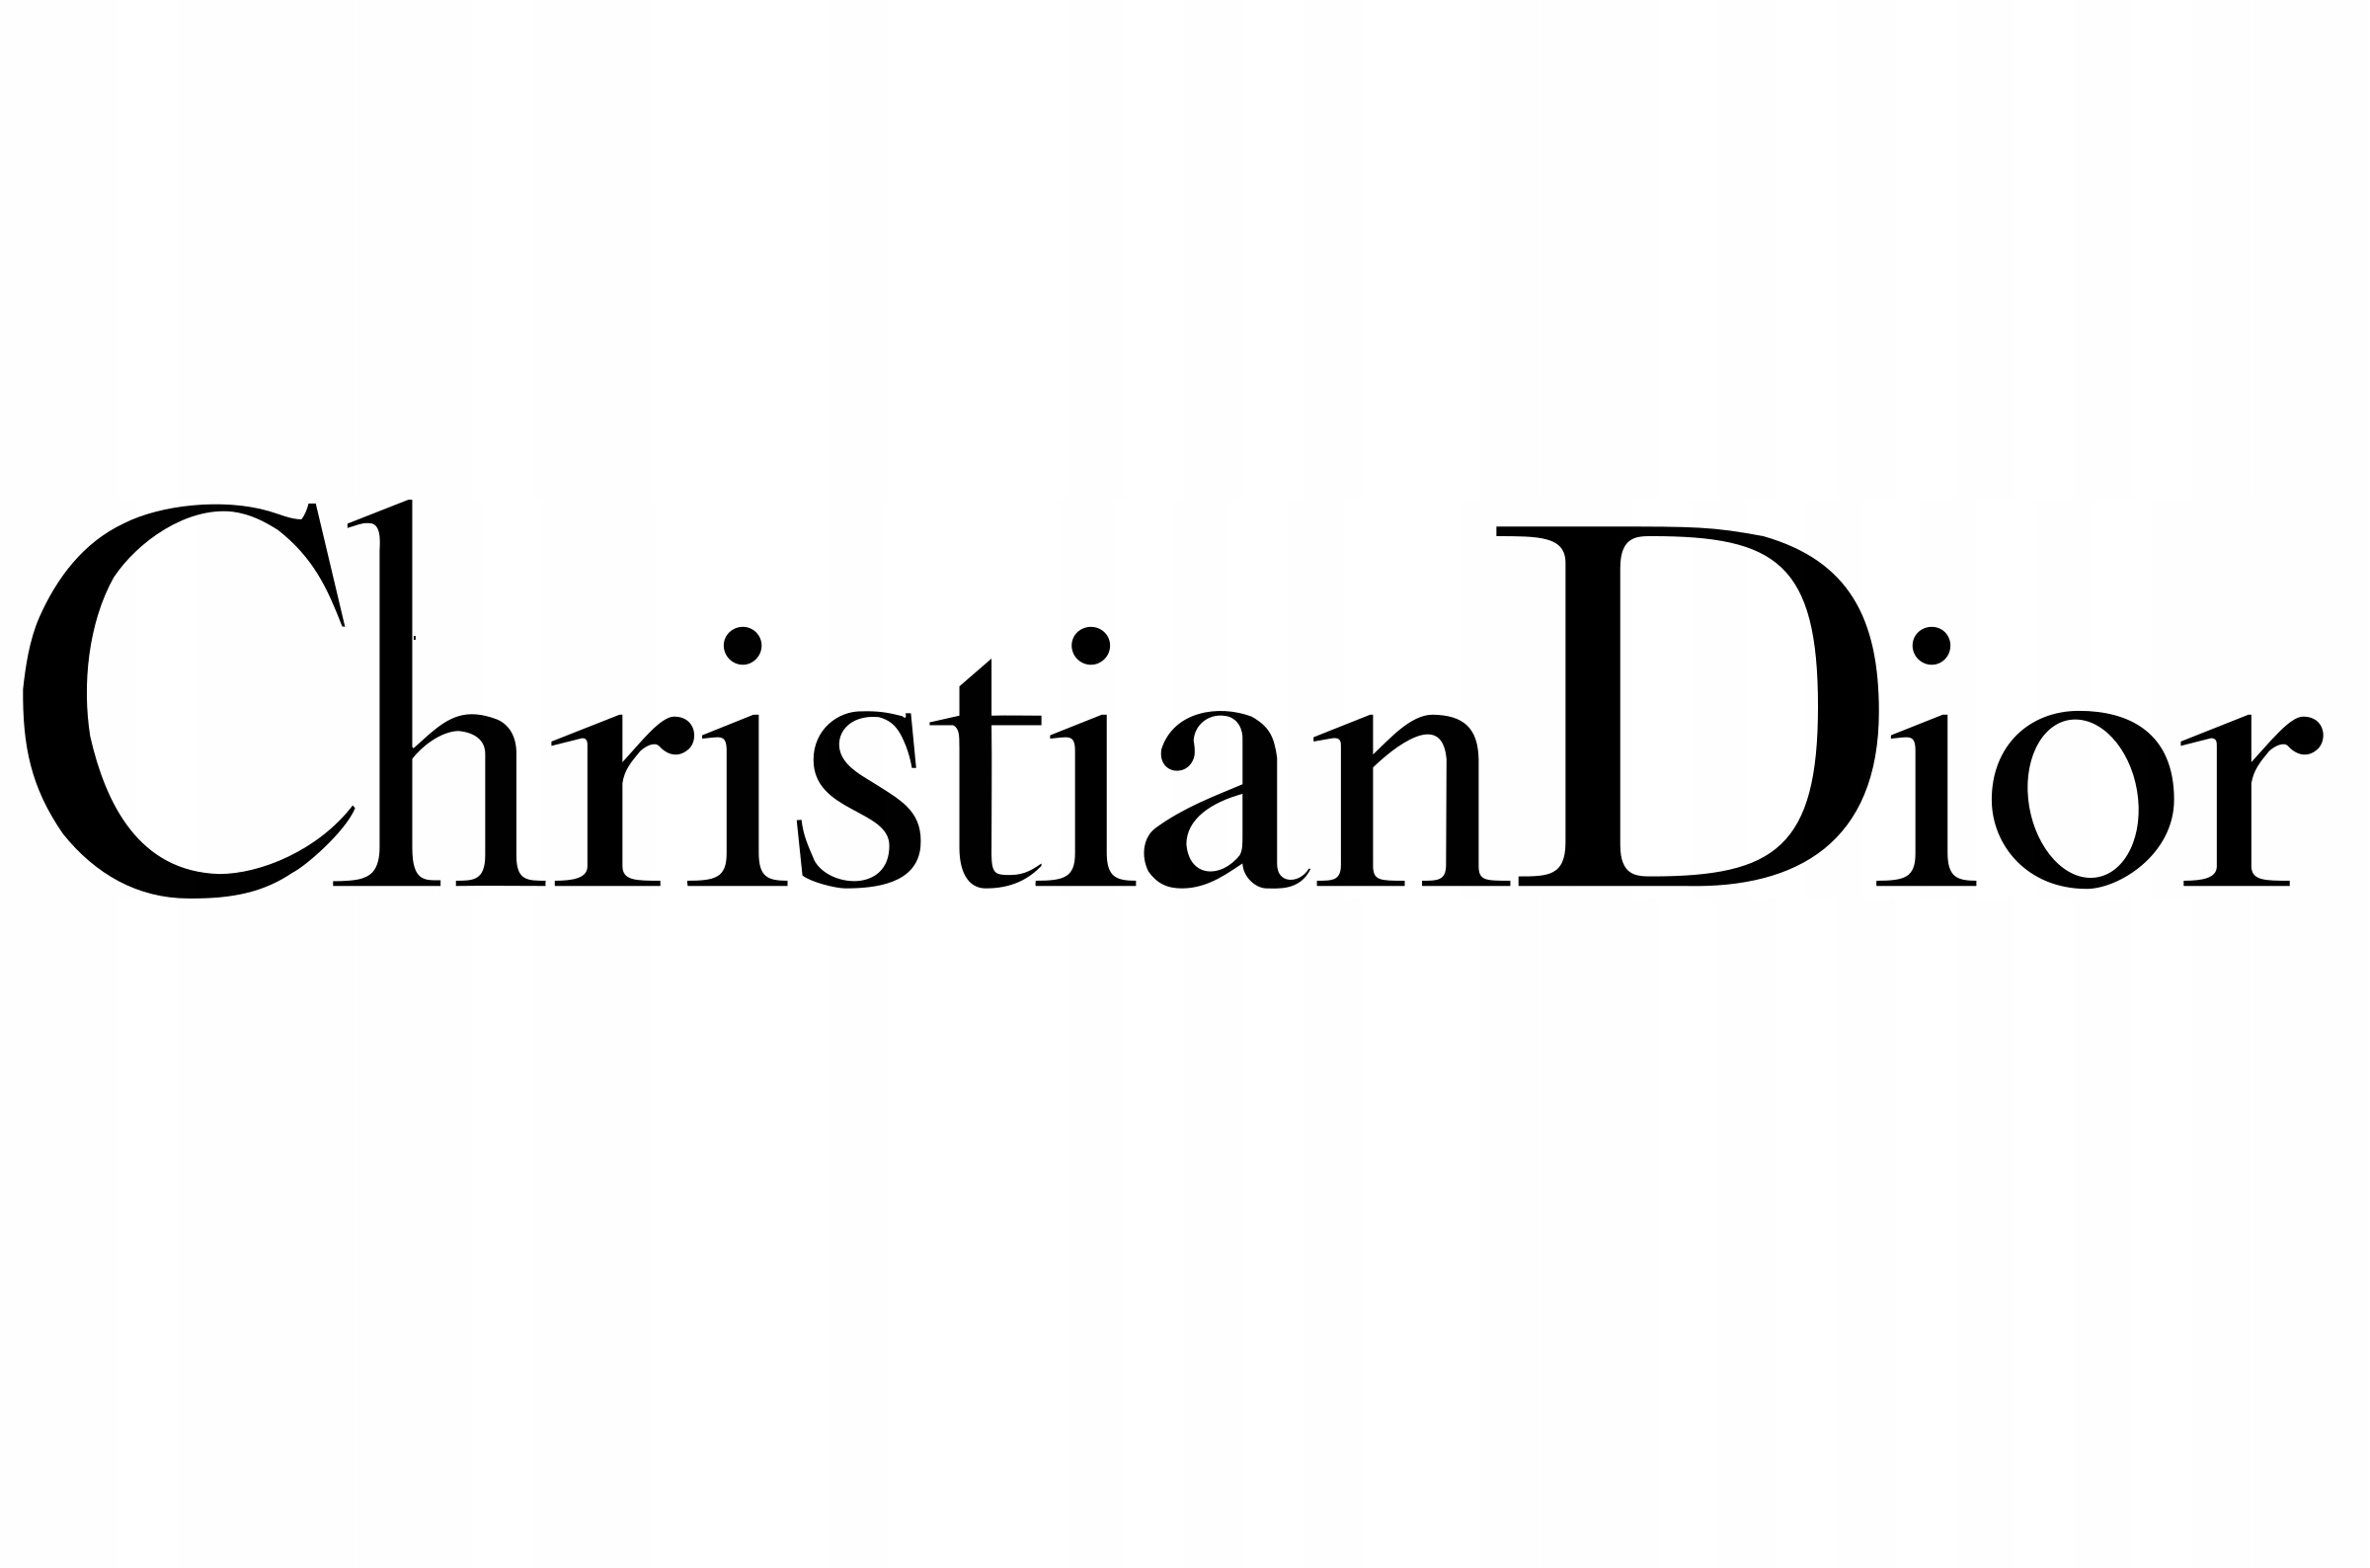 Christian Dior надпись